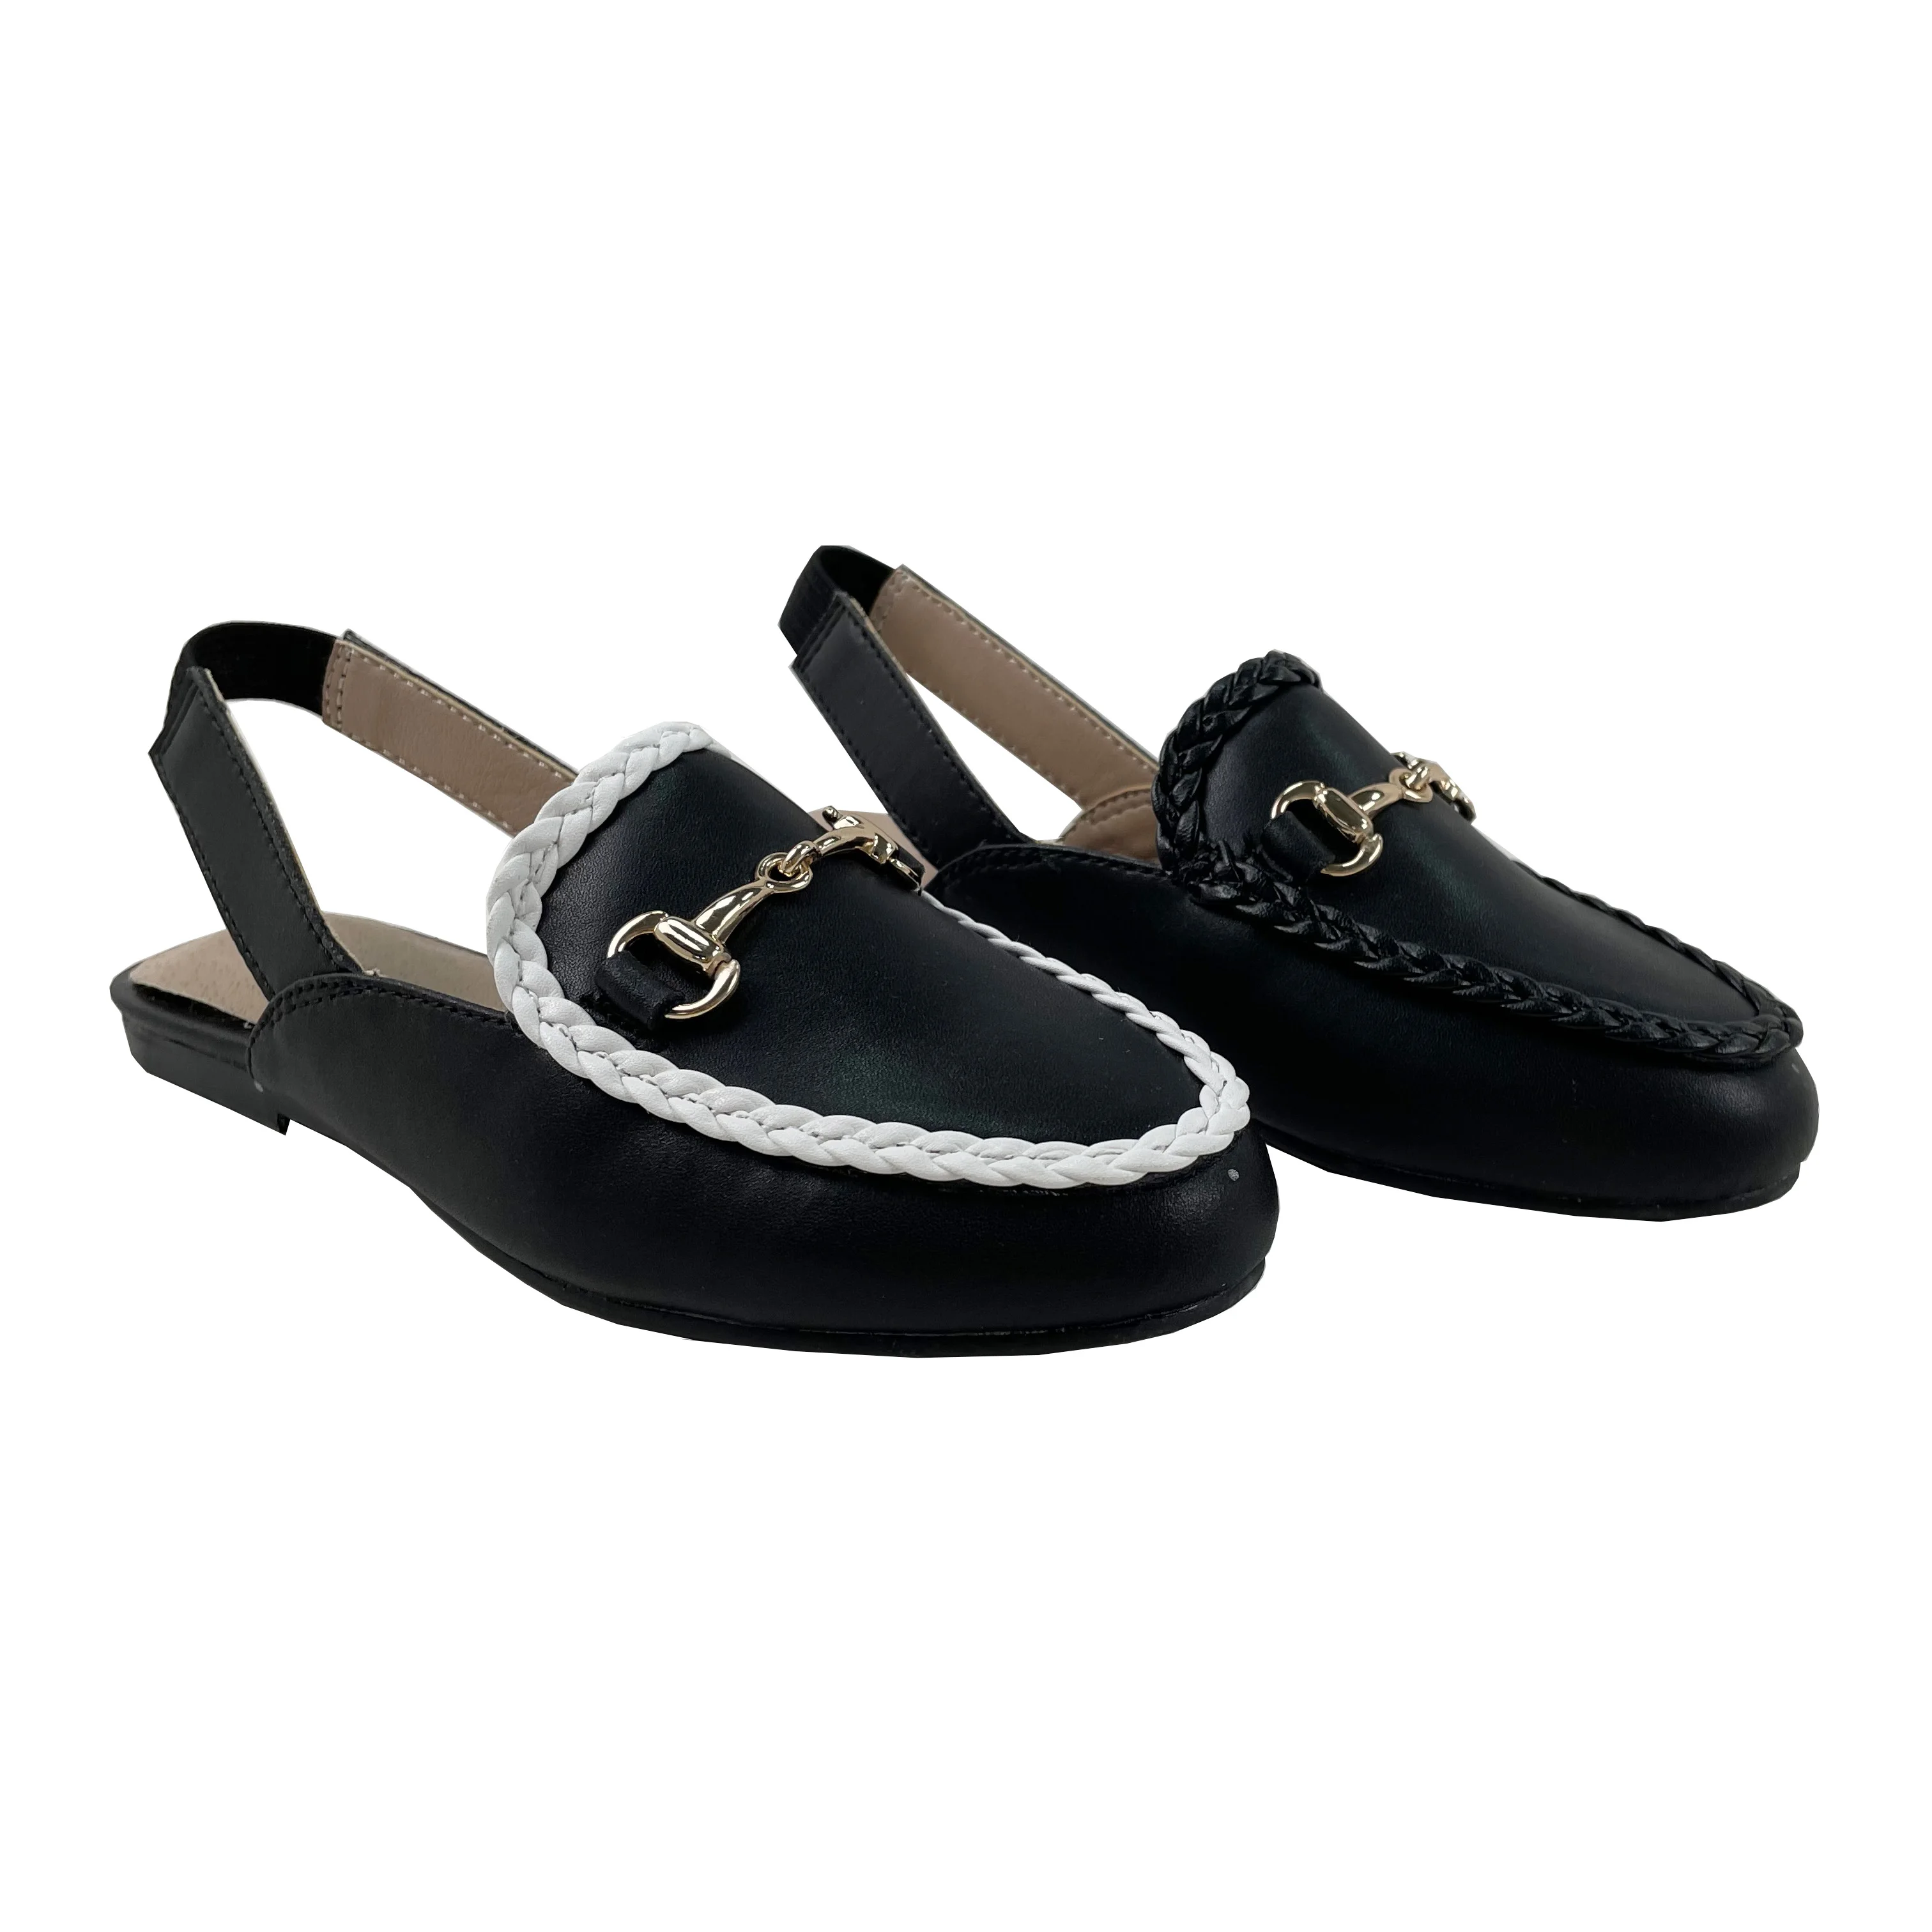 New kids loafer sandals genuine leather Sandals for children sandals fashion kids slippers loafer slingback girls